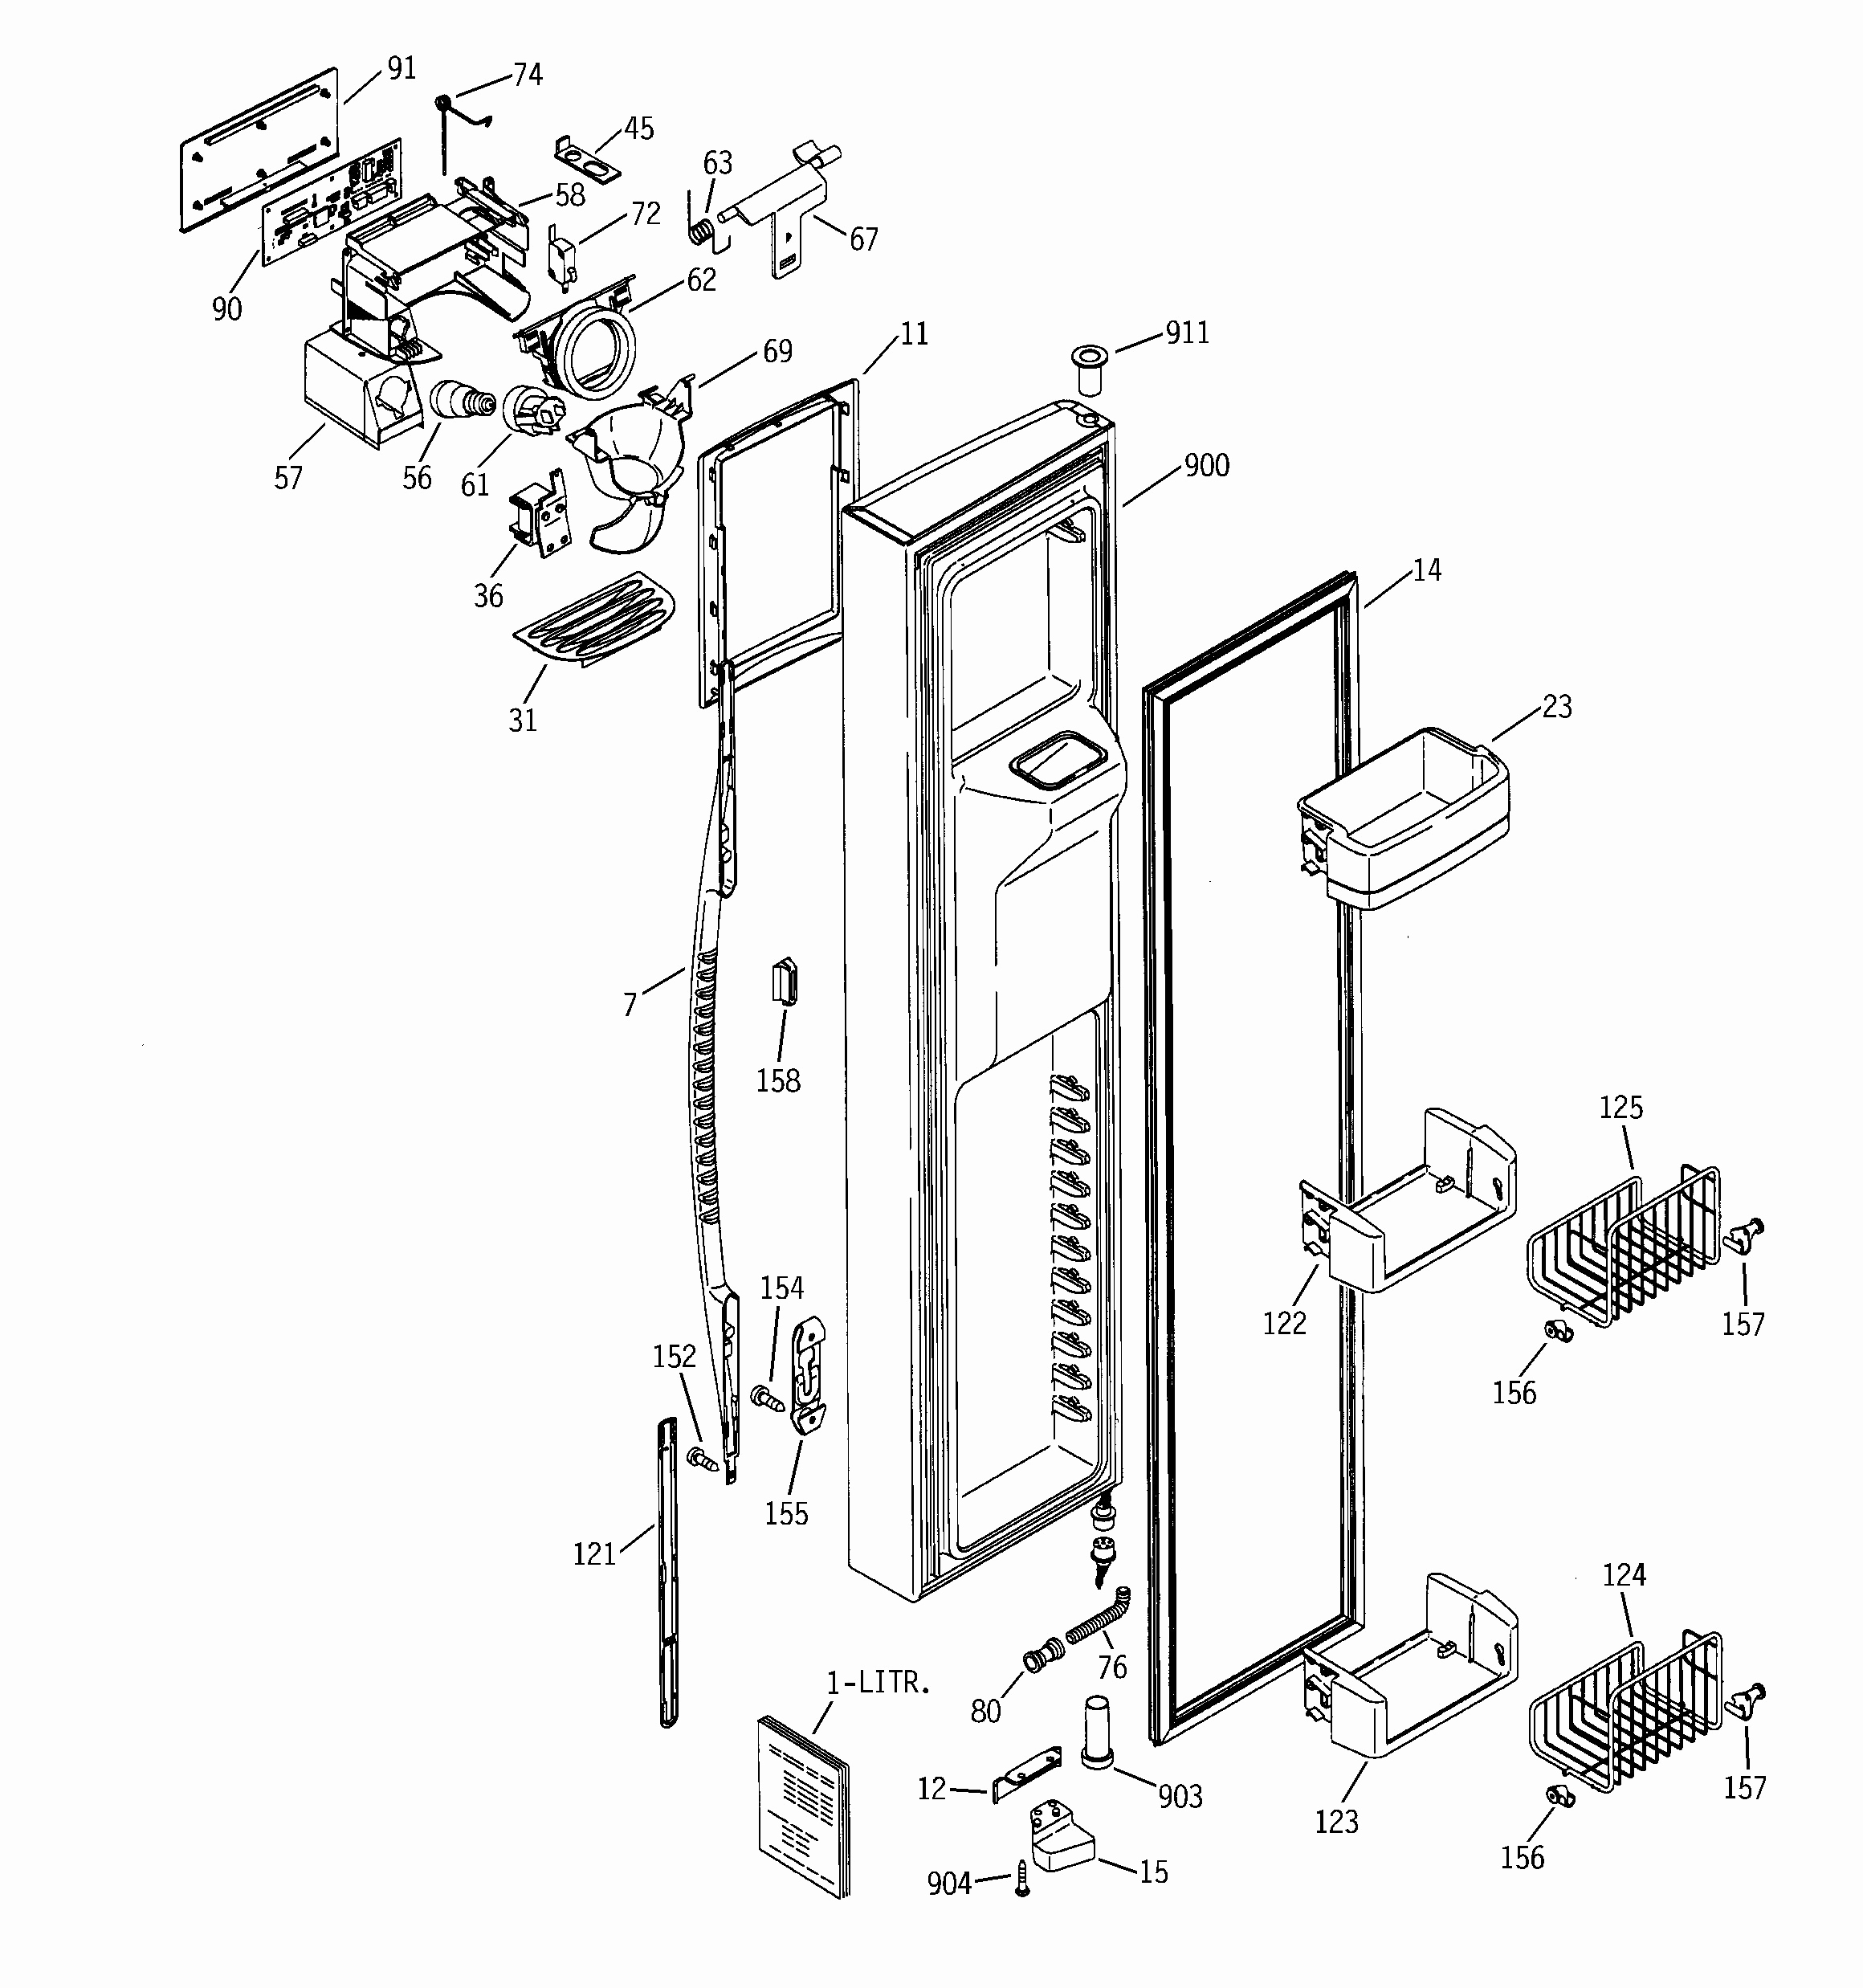 Whirlpool Gold Refrigerator Wiring Diagram - Trusted Wiring Diagram - Whirlpool Refrigerator Wiring Diagram